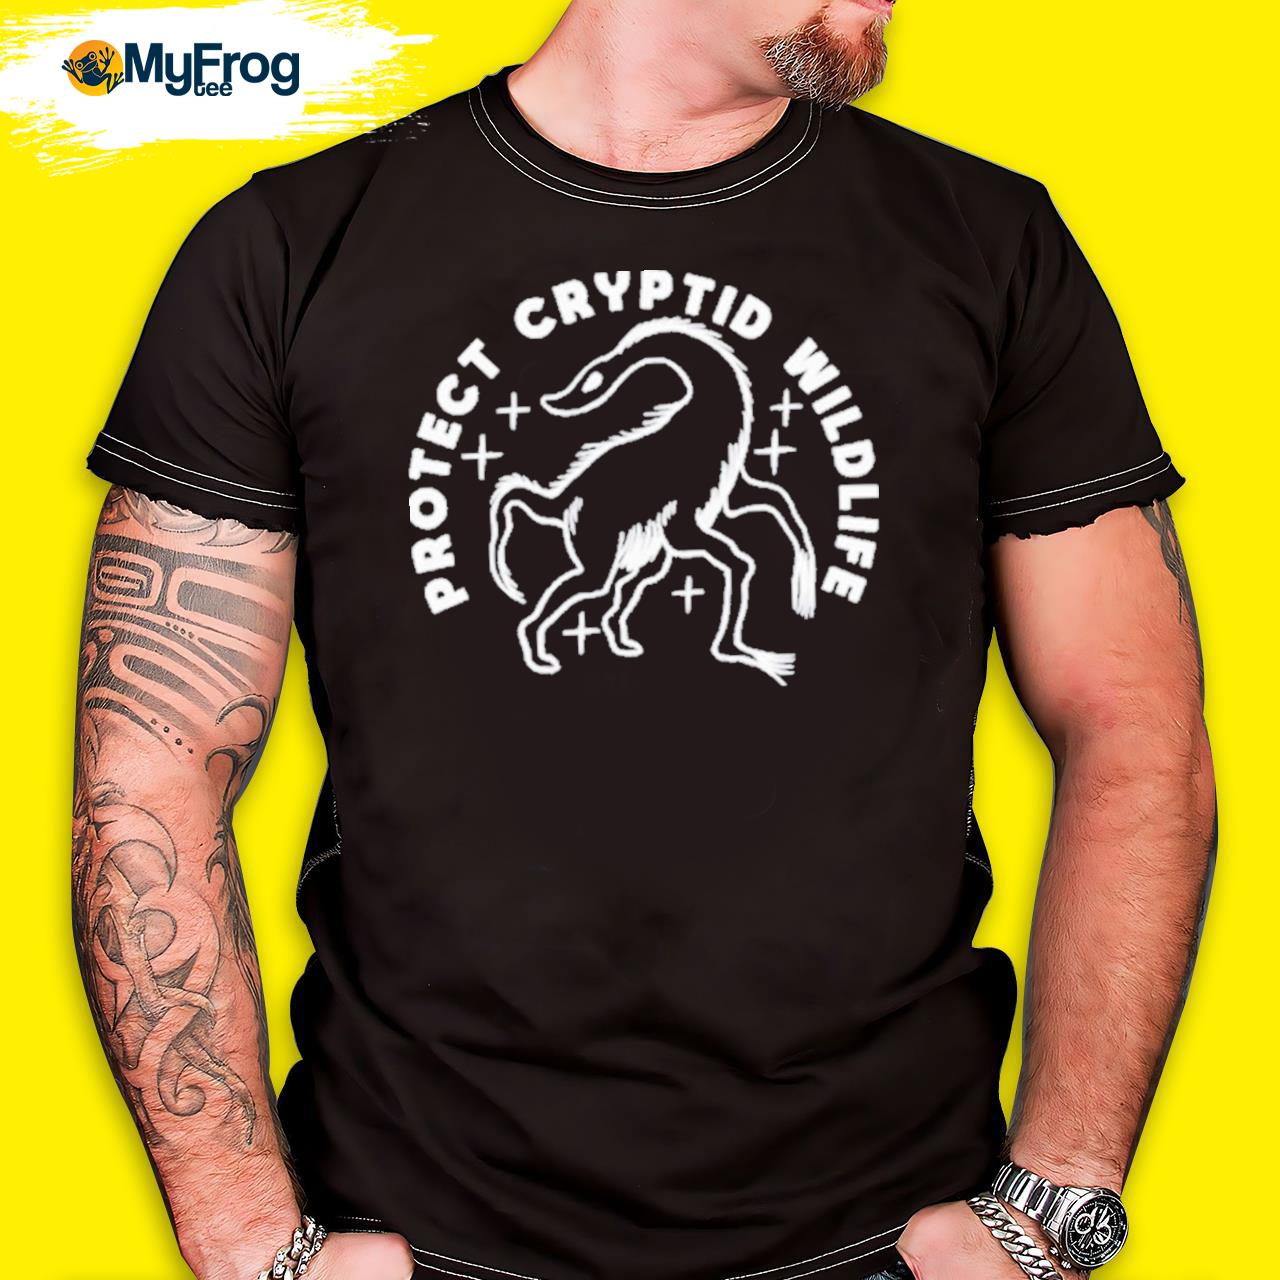 Protect Cryptid Wildlife Shirt